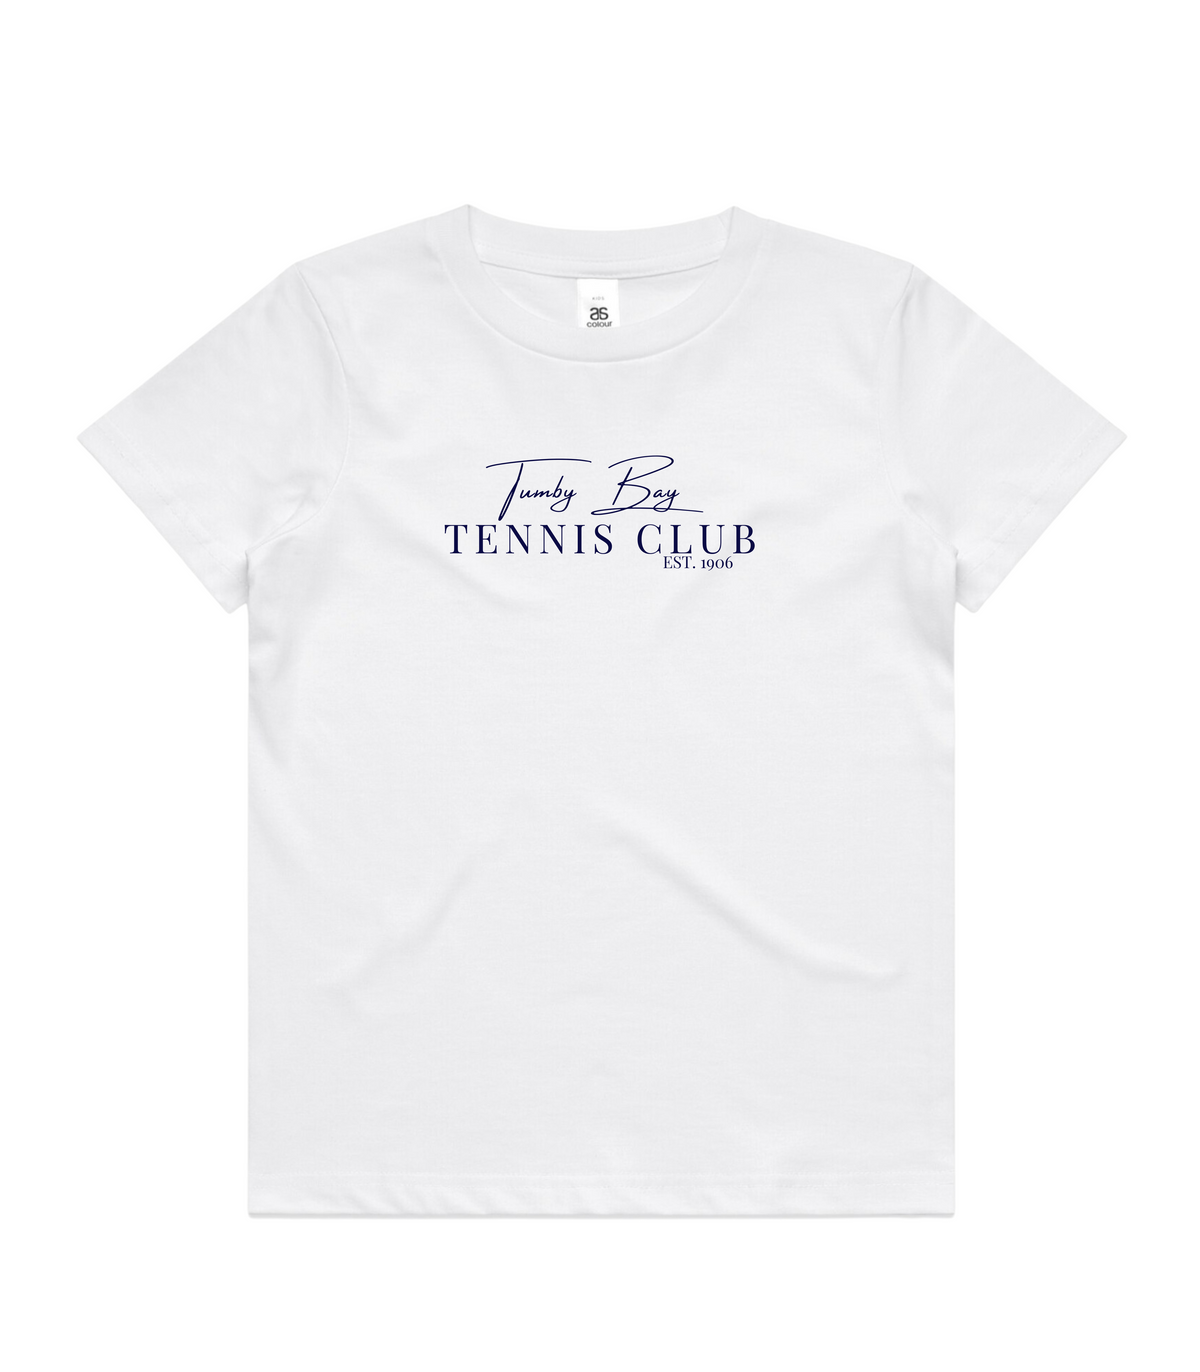 Tumby Bay Tennis Club Kids Staple Tee 3006-Collins Clothing Co